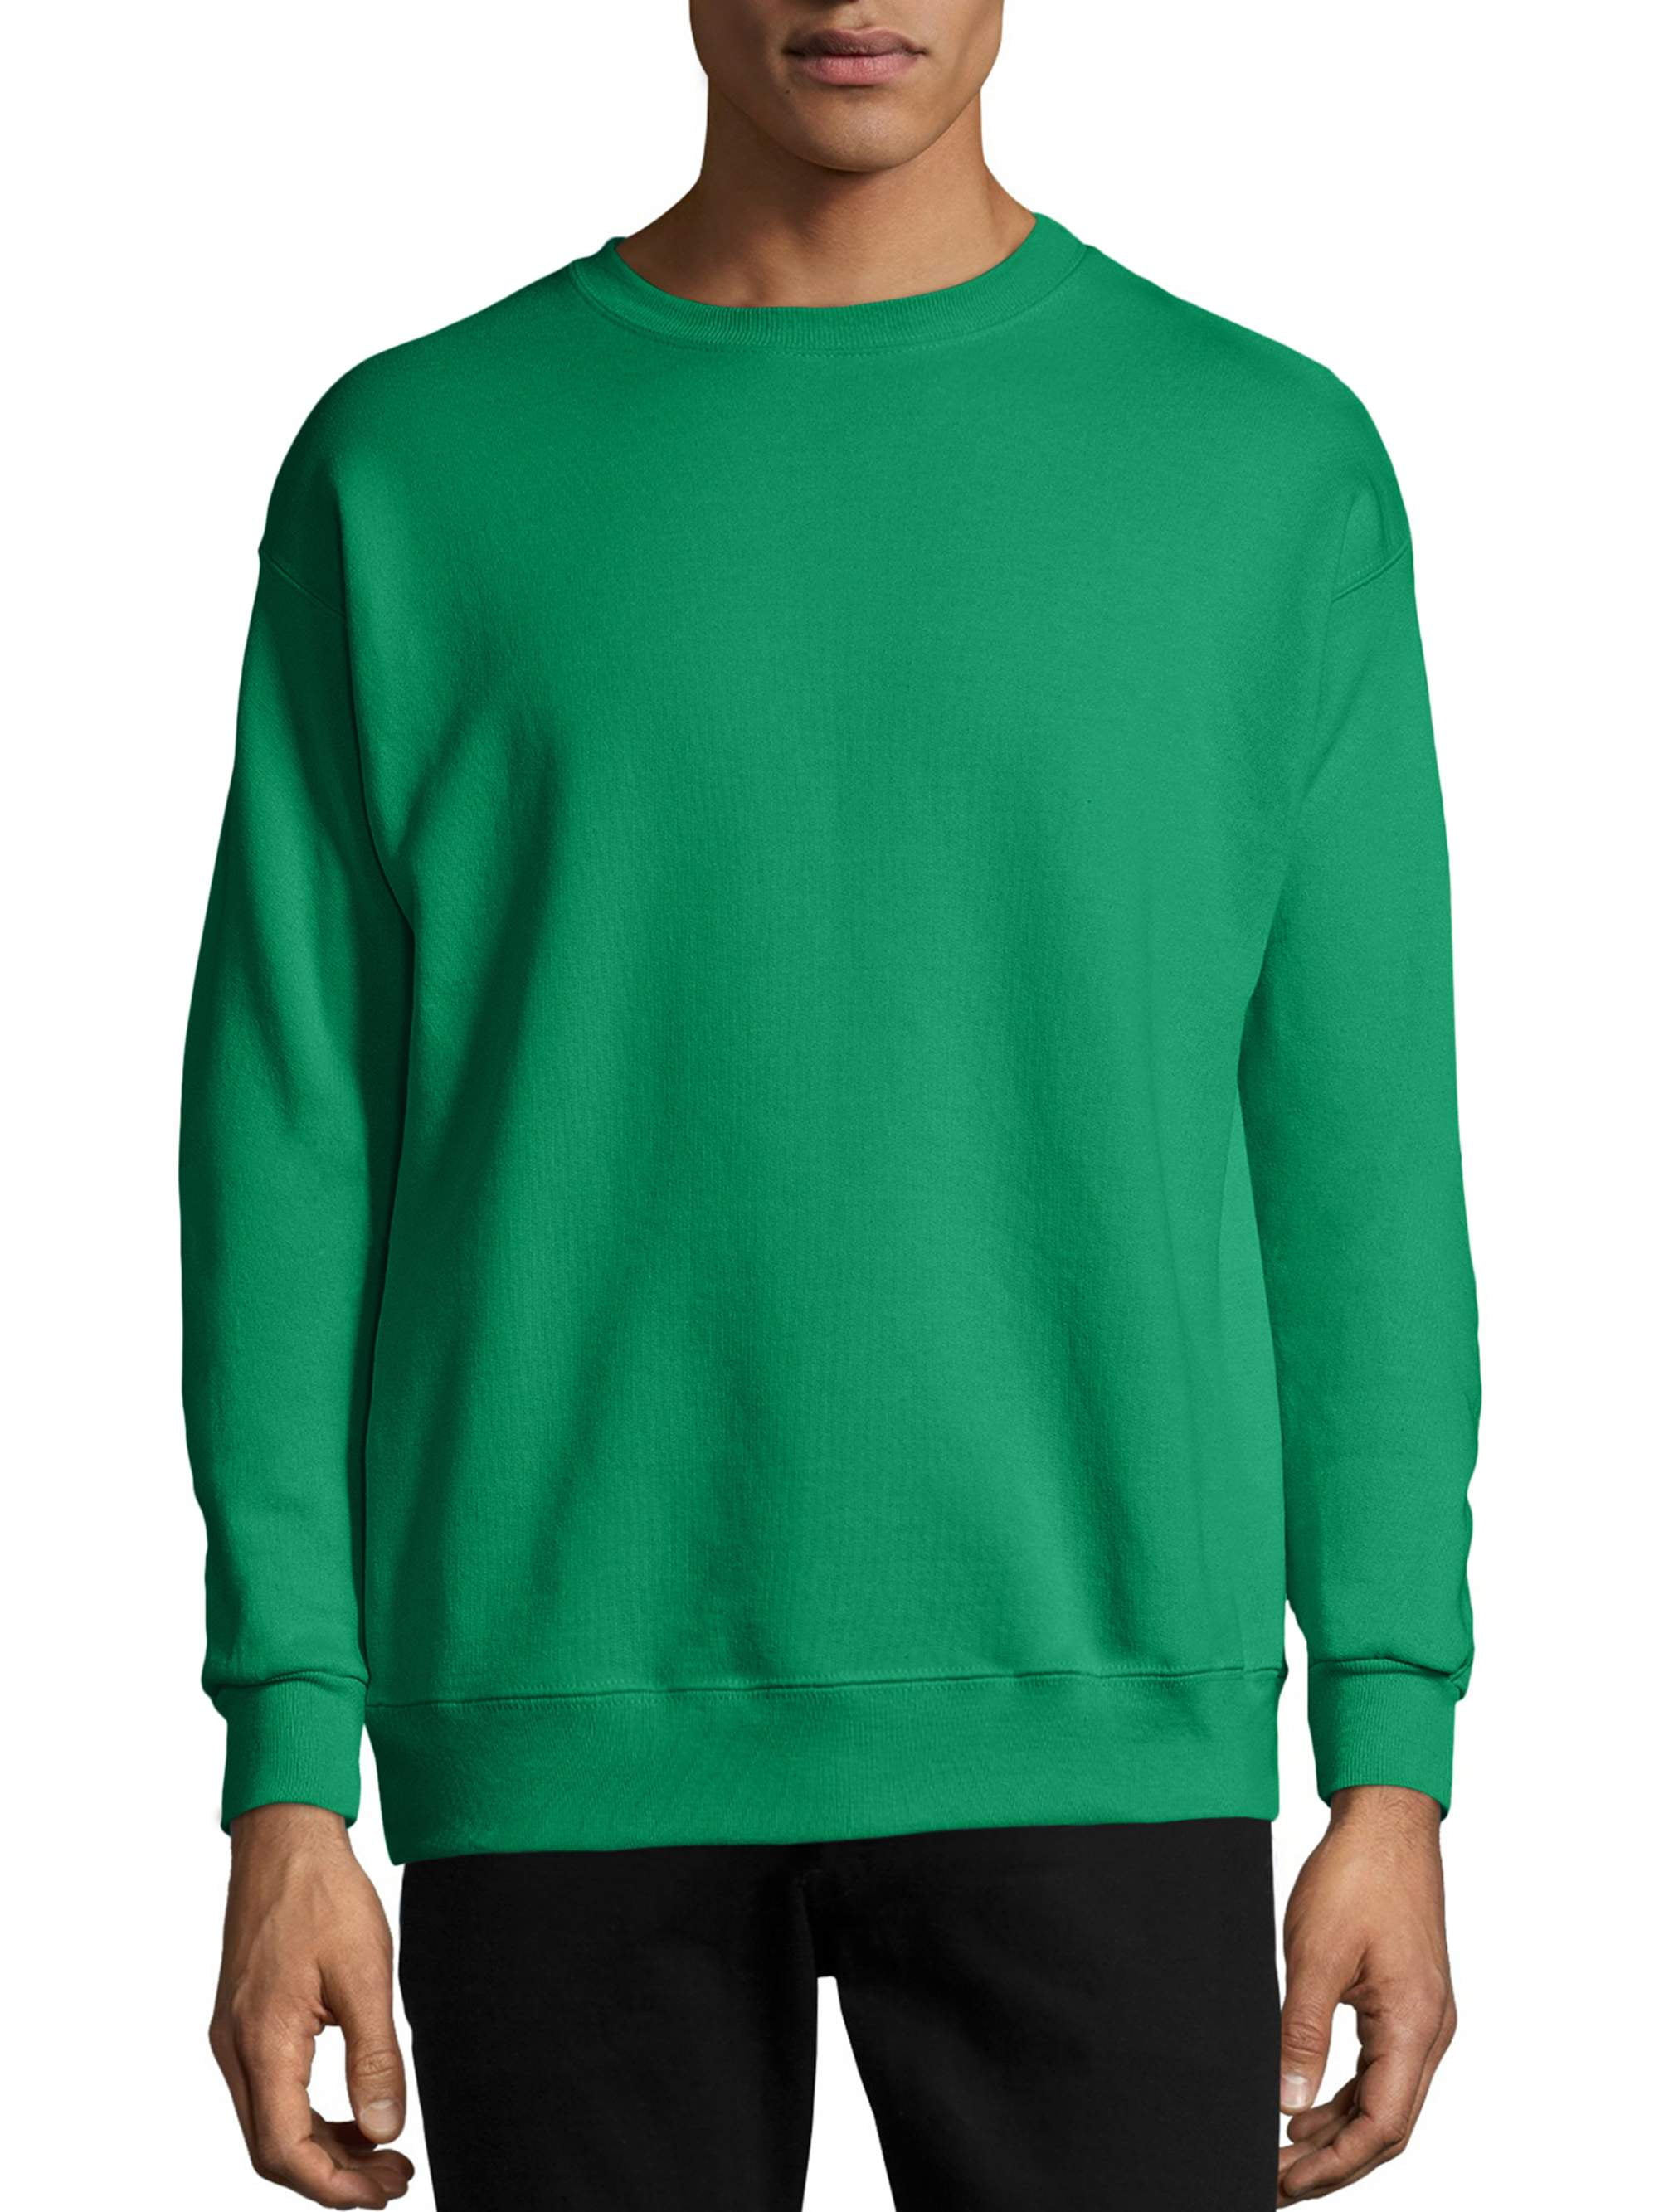 Hanes Sweatshirt Comfort Blend Eco Smart Crew Long Sleeve Crewneck Fleece Knit 